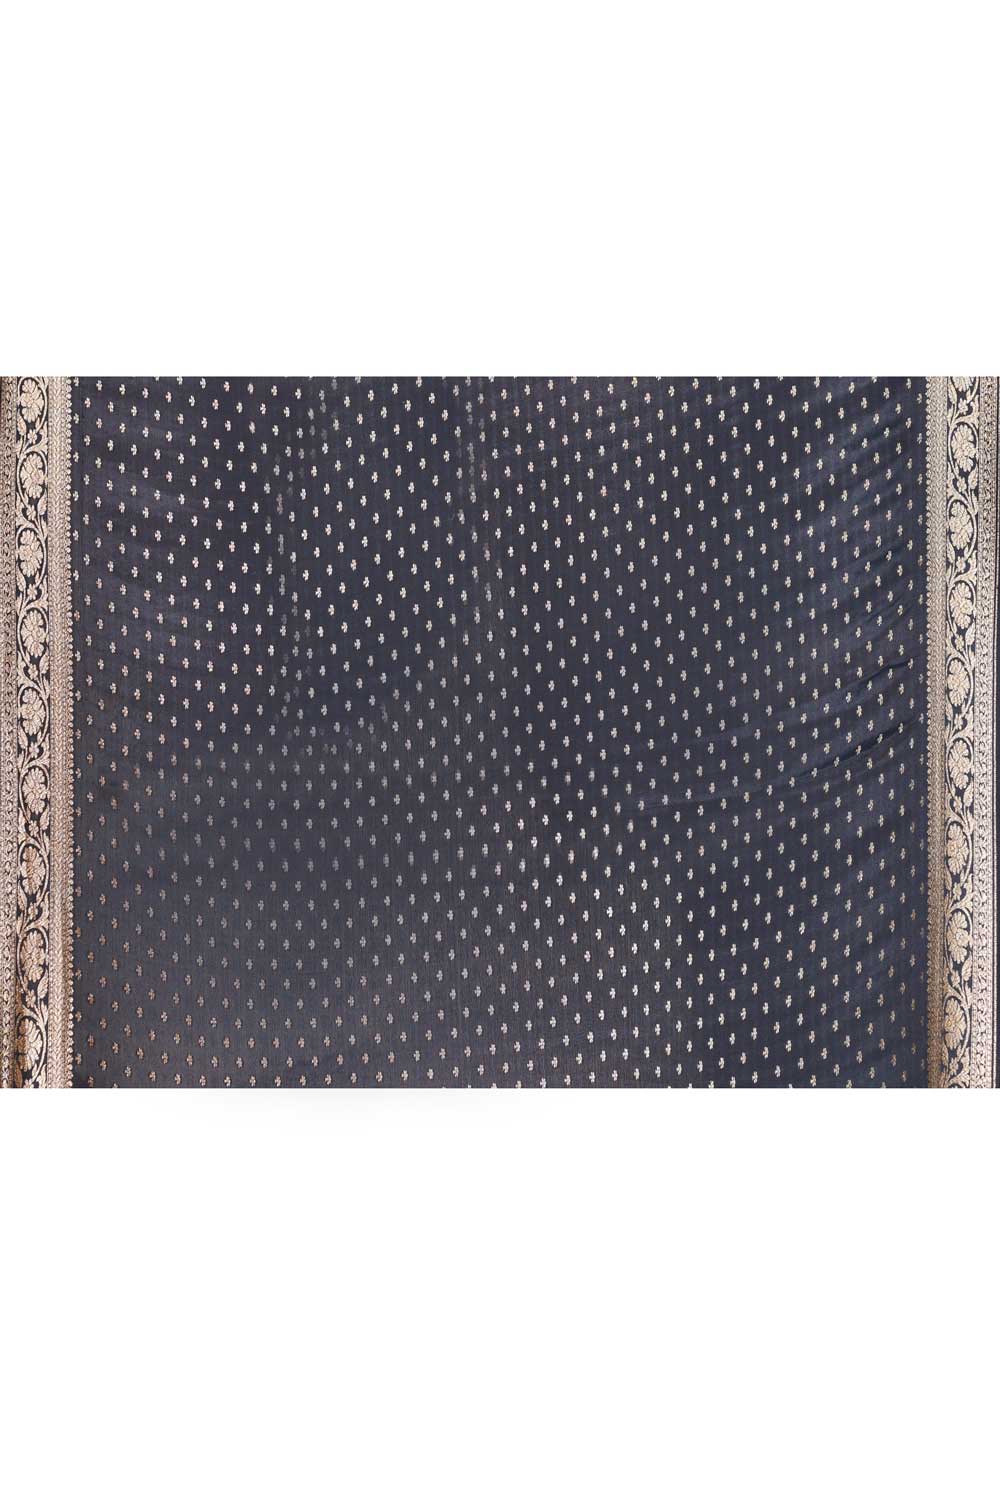 Grey - Black Banarasi Handloom Silk Saree